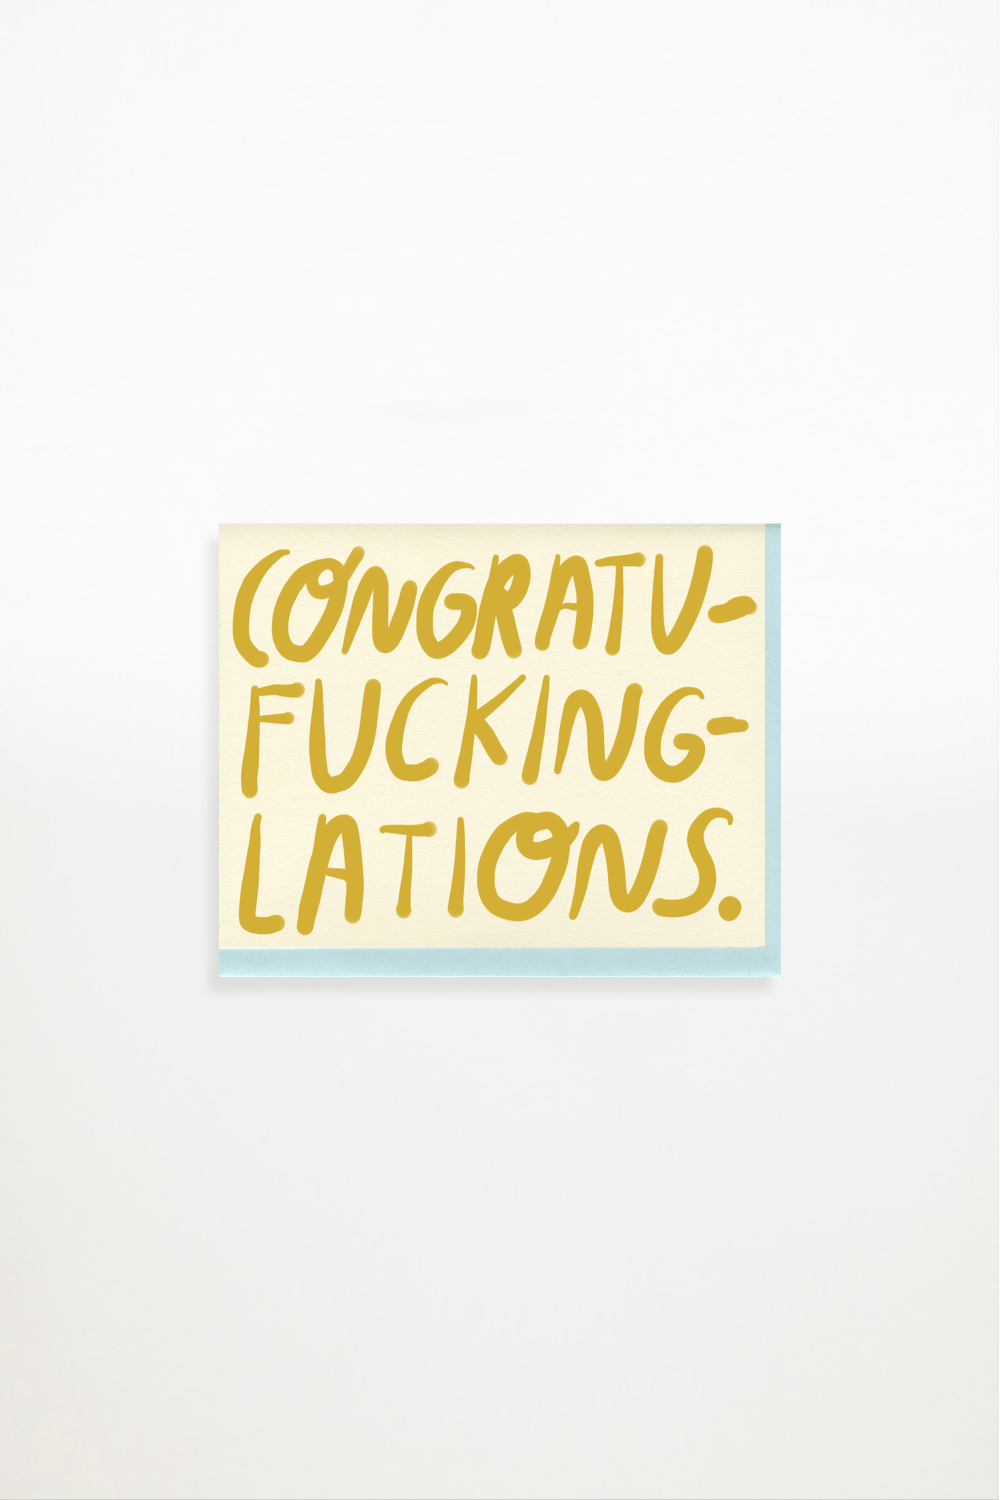 People I've Loved - Greeting Card - Congratu-fucking-lations - Ensemble Studios